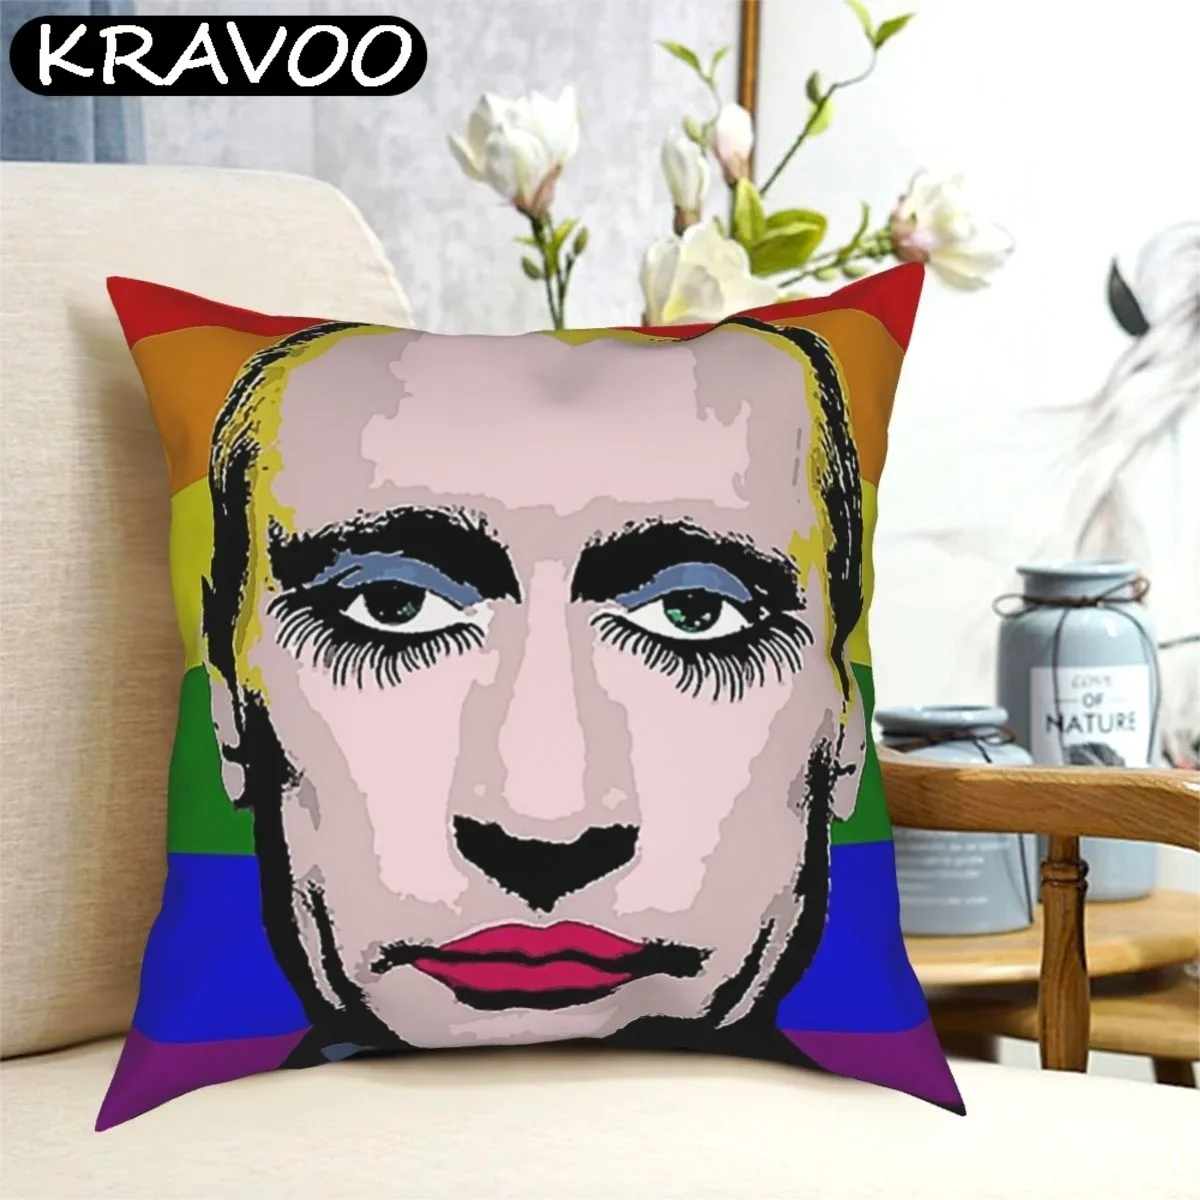 

Vladimir Putin Cushion Cover Travel Pillow Case Decorative Polyester Home Sofa Throw Pillows Case 45x45cm Funda Cojin Cojines